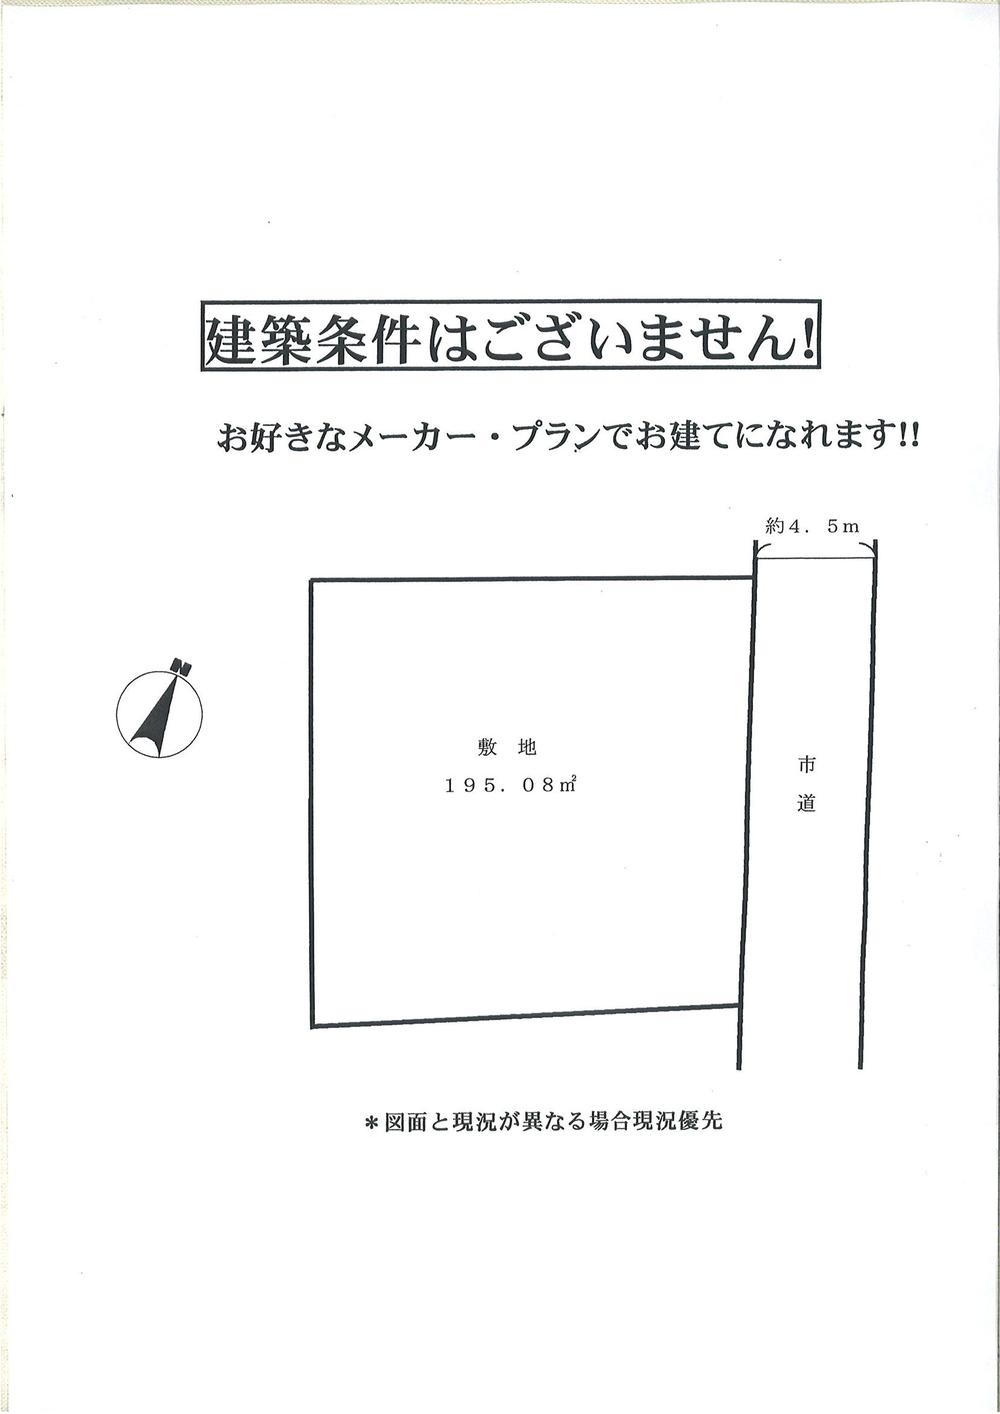 Compartment figure. Land price 19,800,000 yen, Land area 195.08 sq m